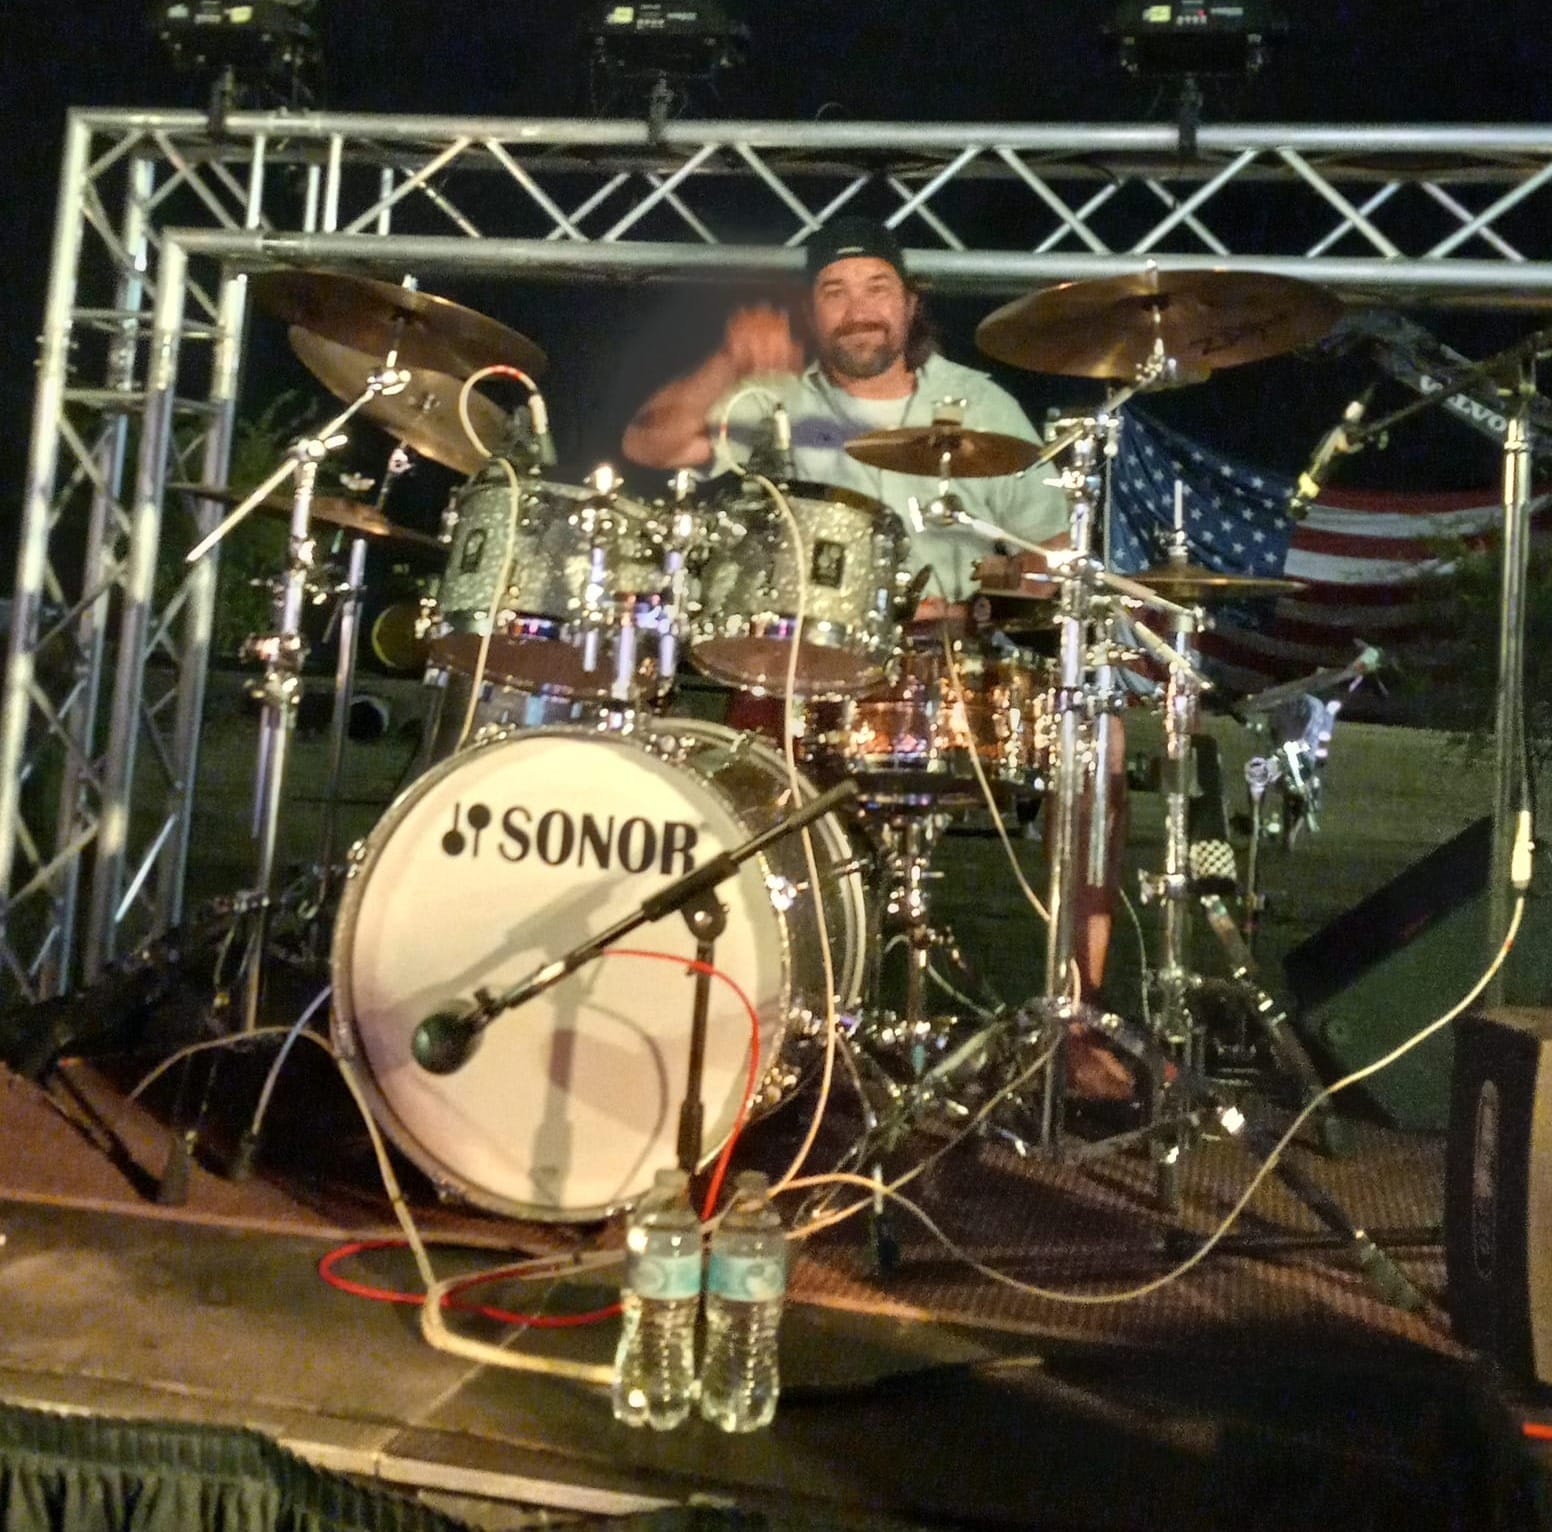 Tim Cole and his metallic sparkle Sonor drum kit...I'm jealous!